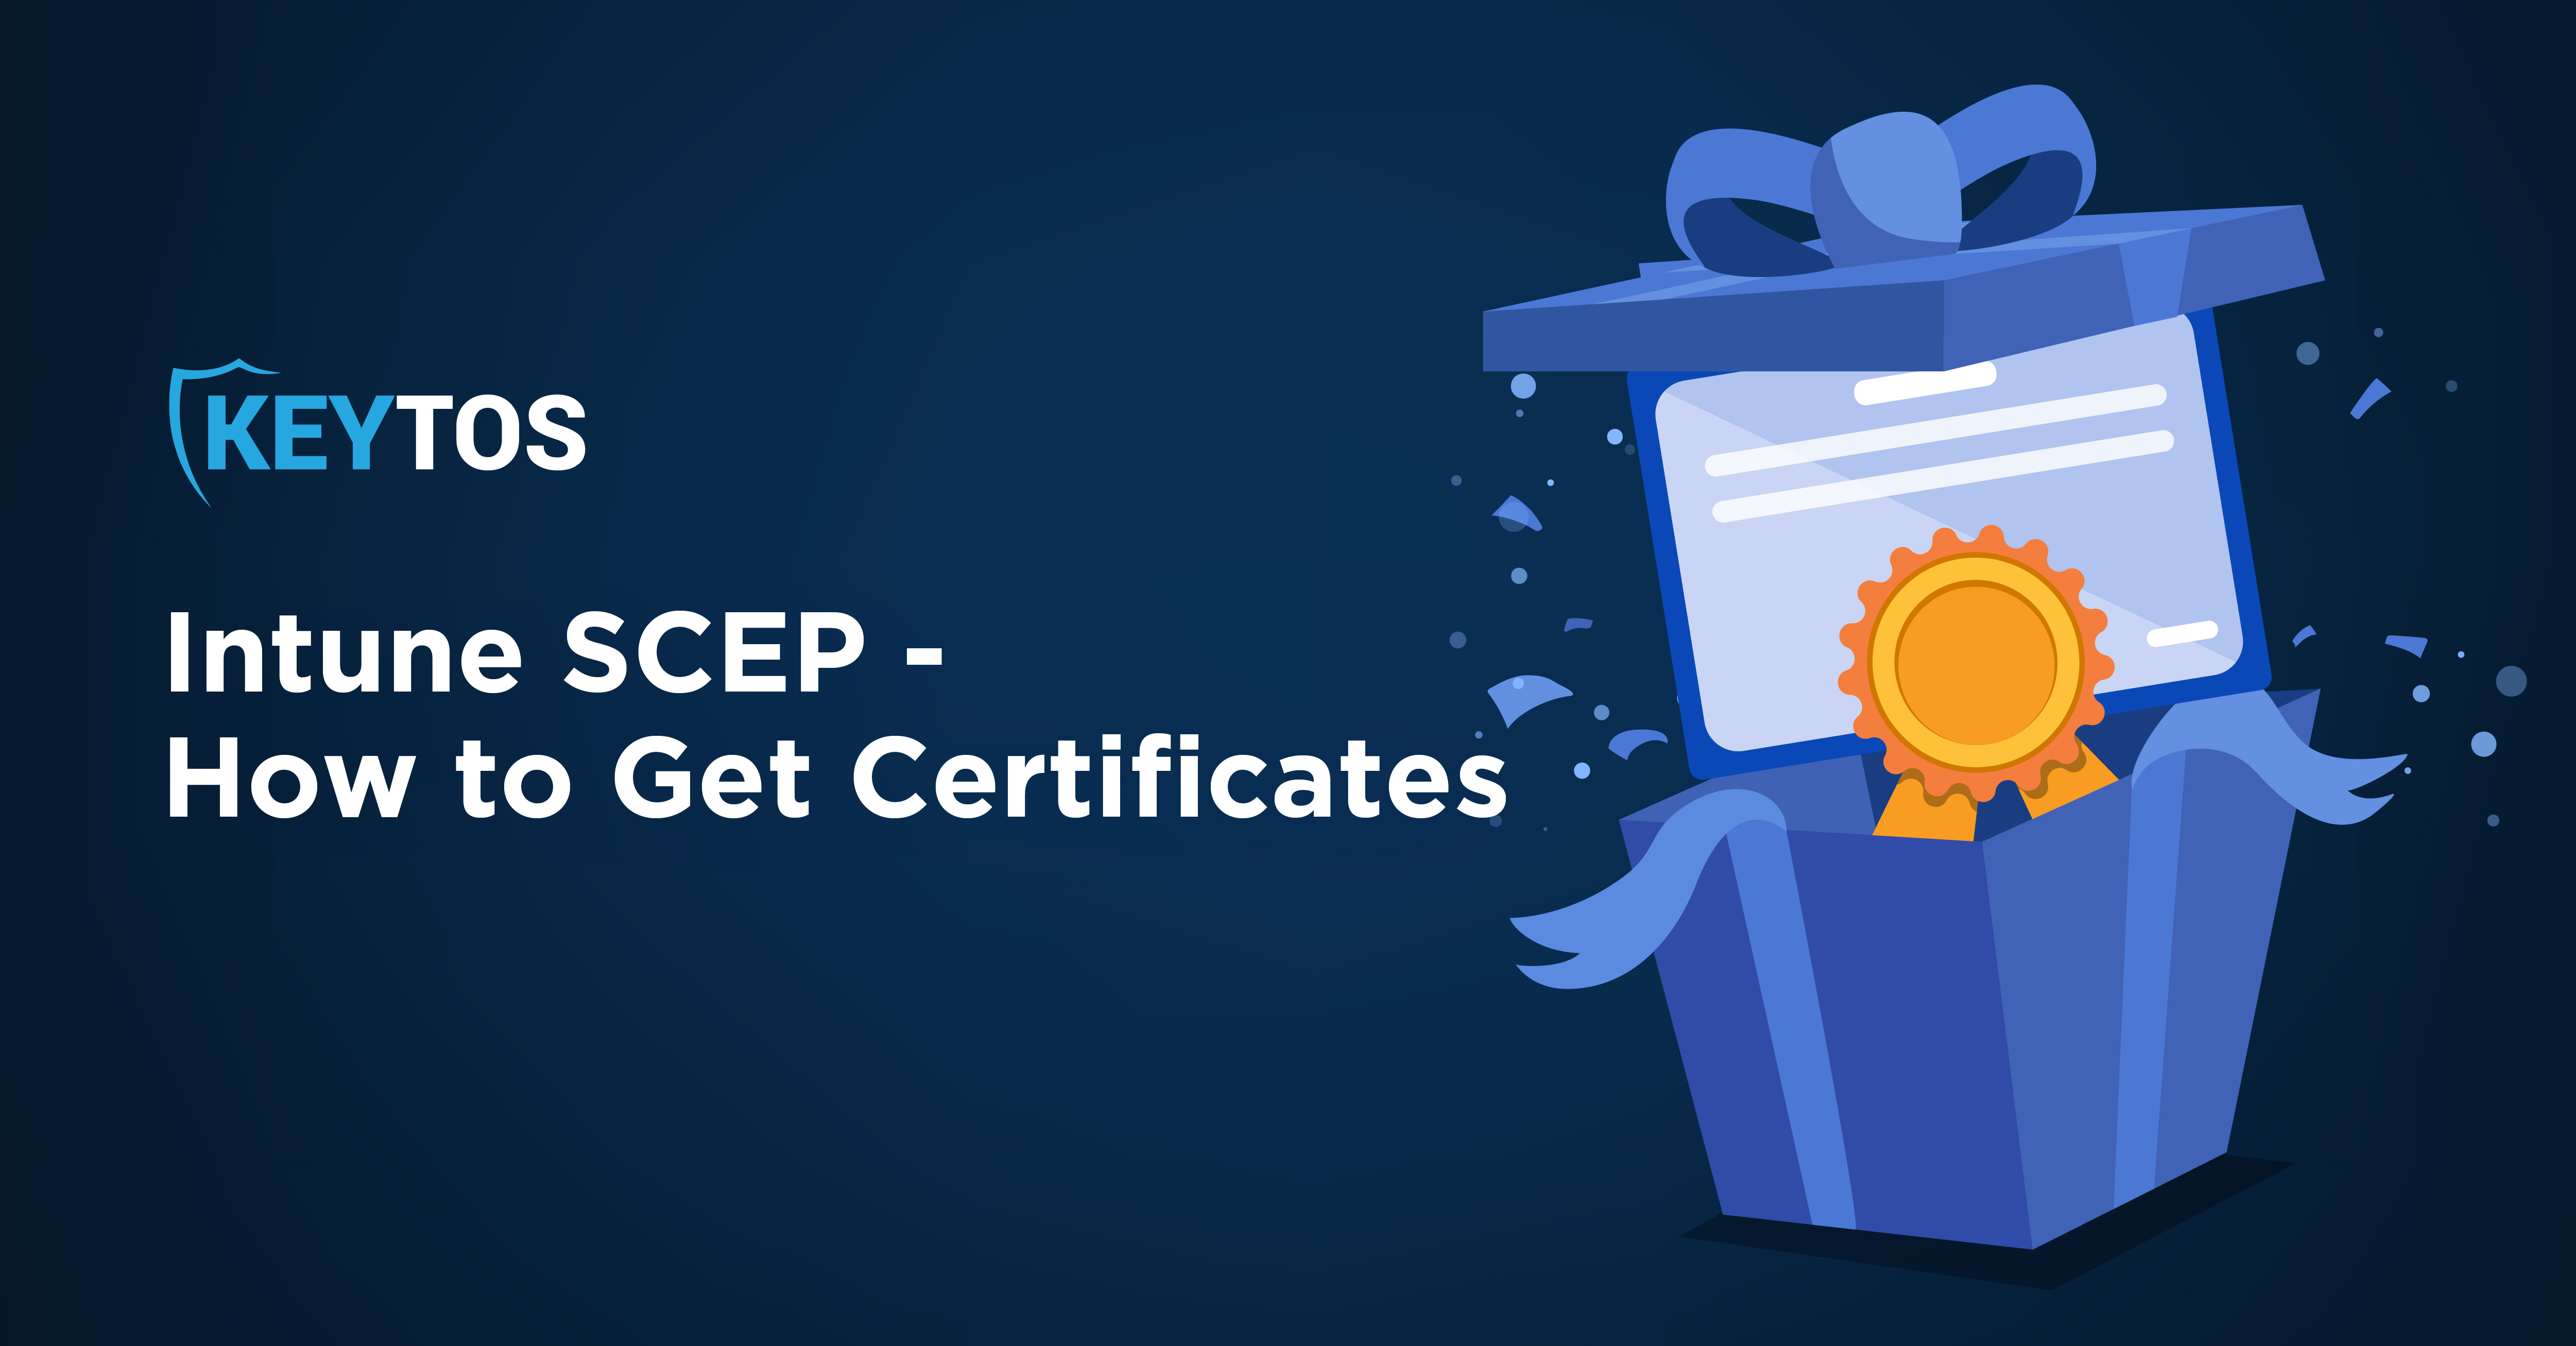 Intune SCEP - How to Get SSL Certificates